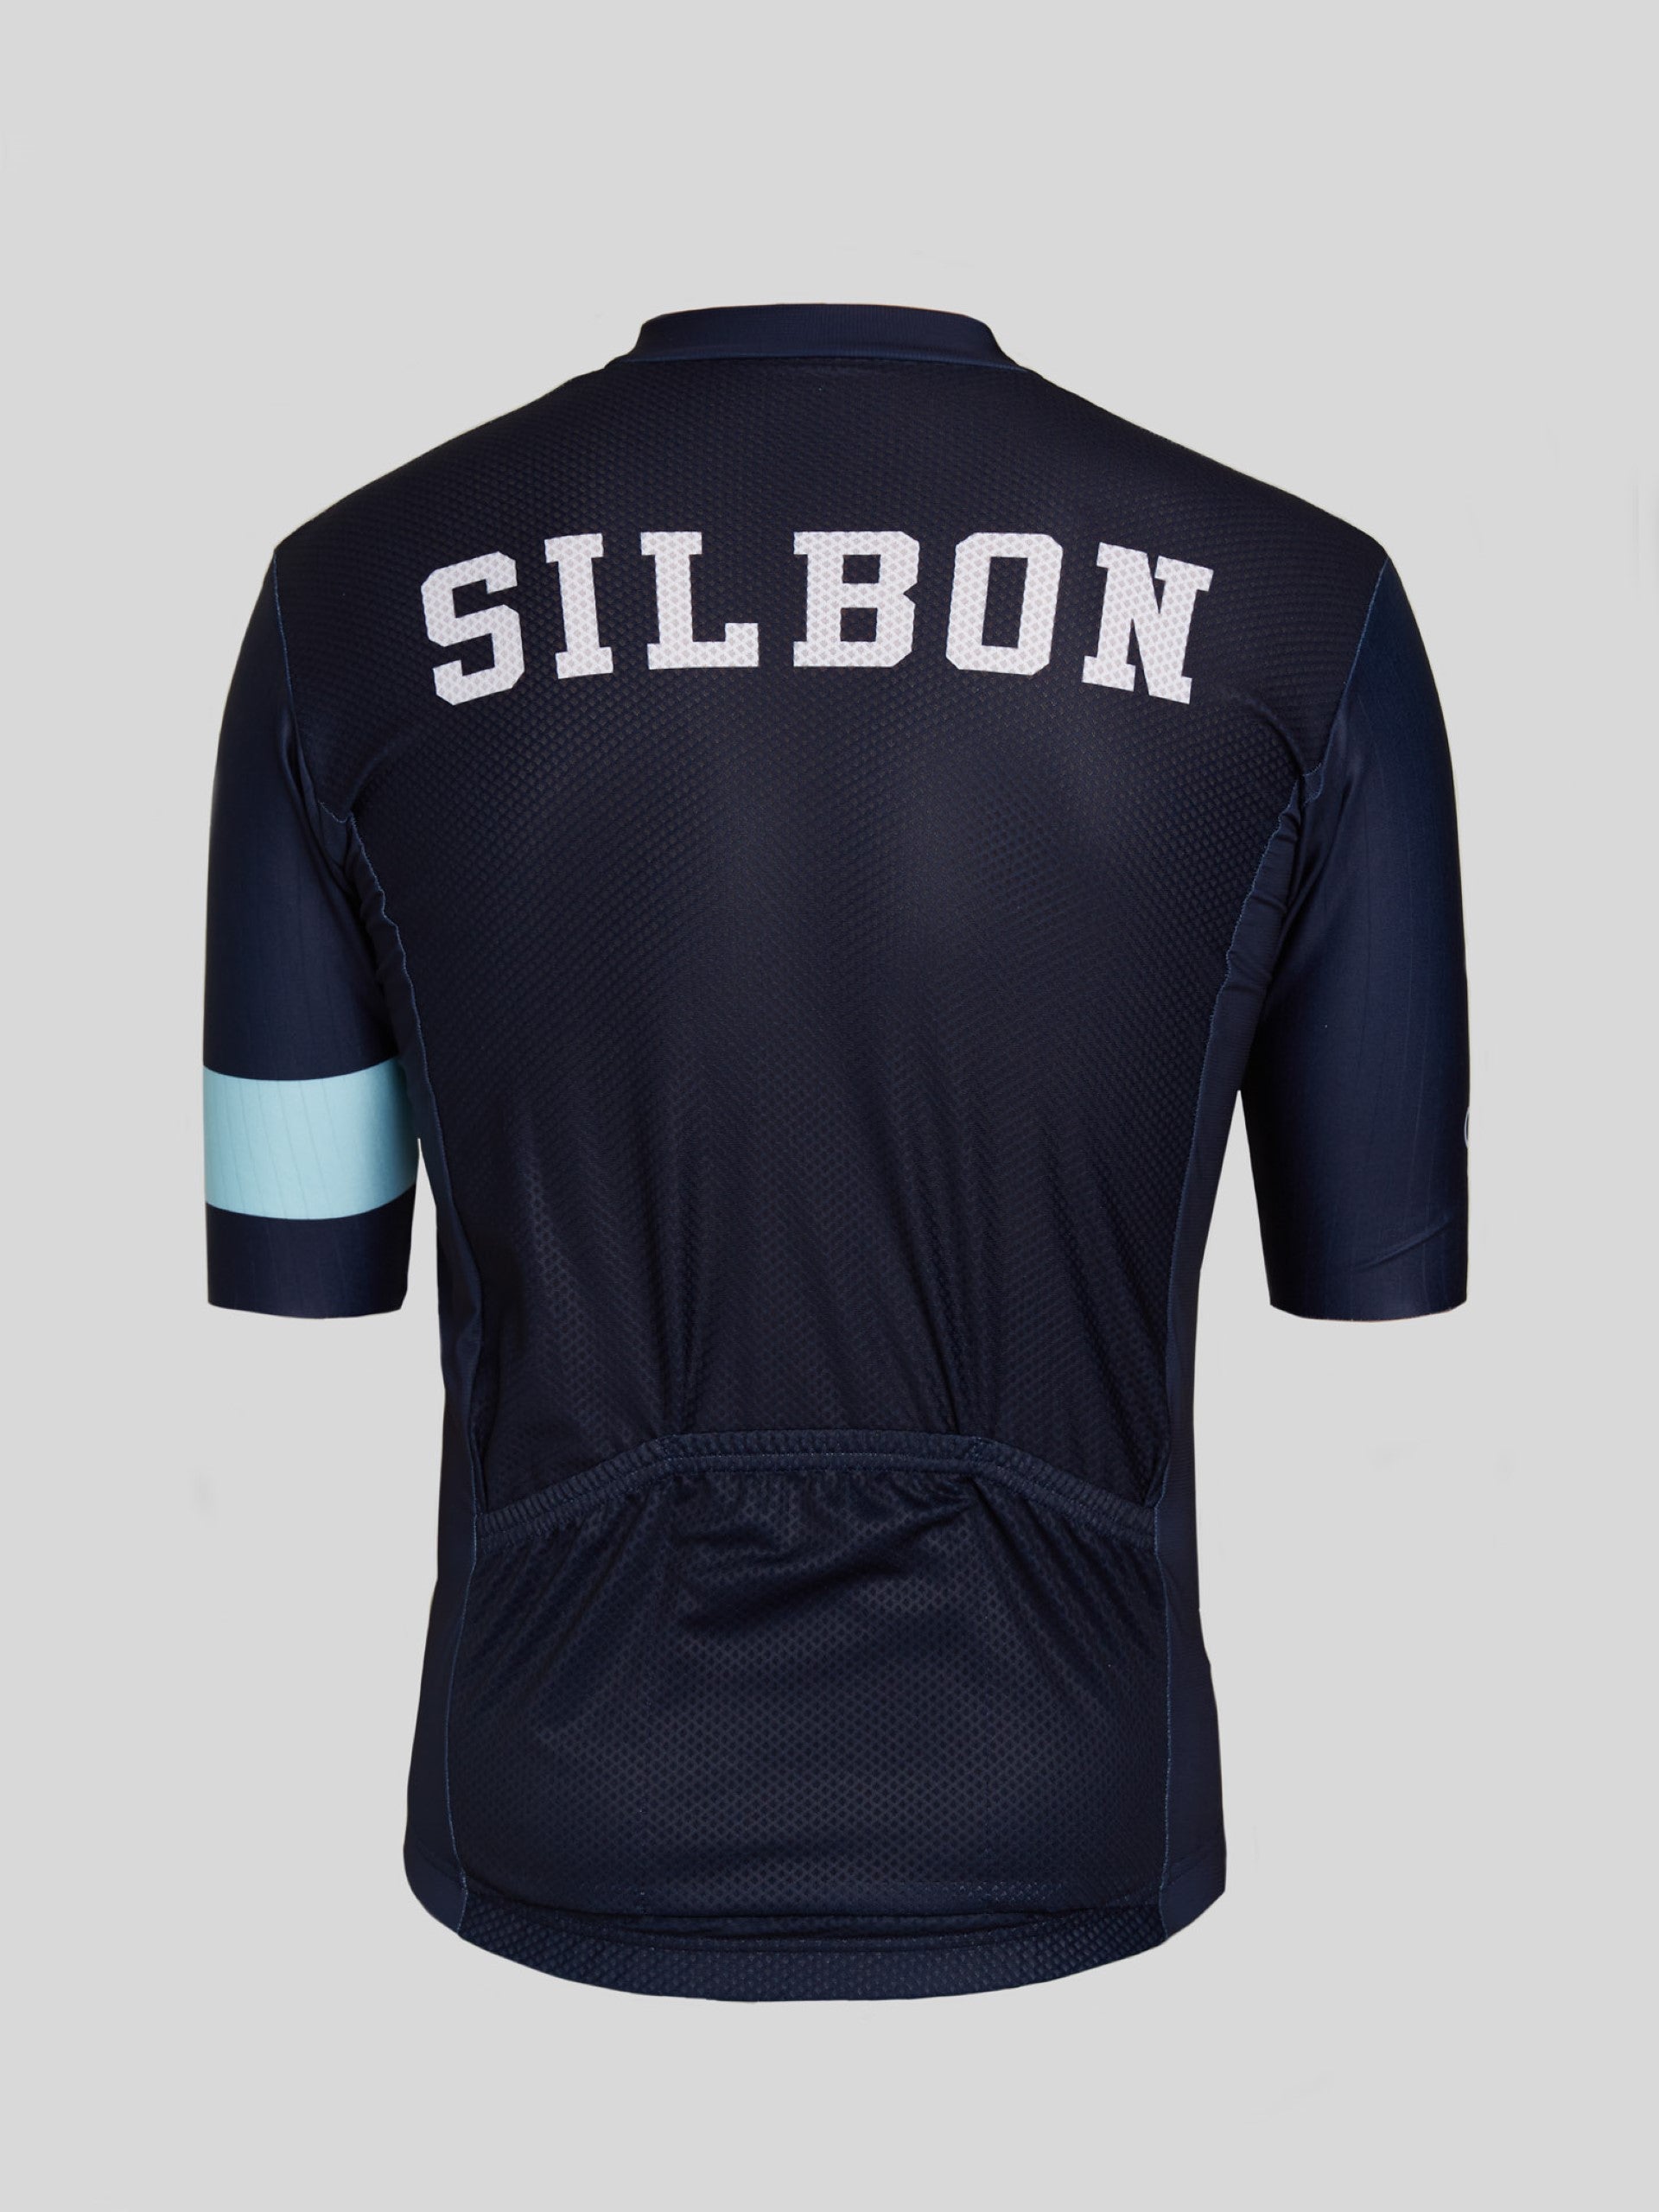 Silbon aquamarine blue jersey